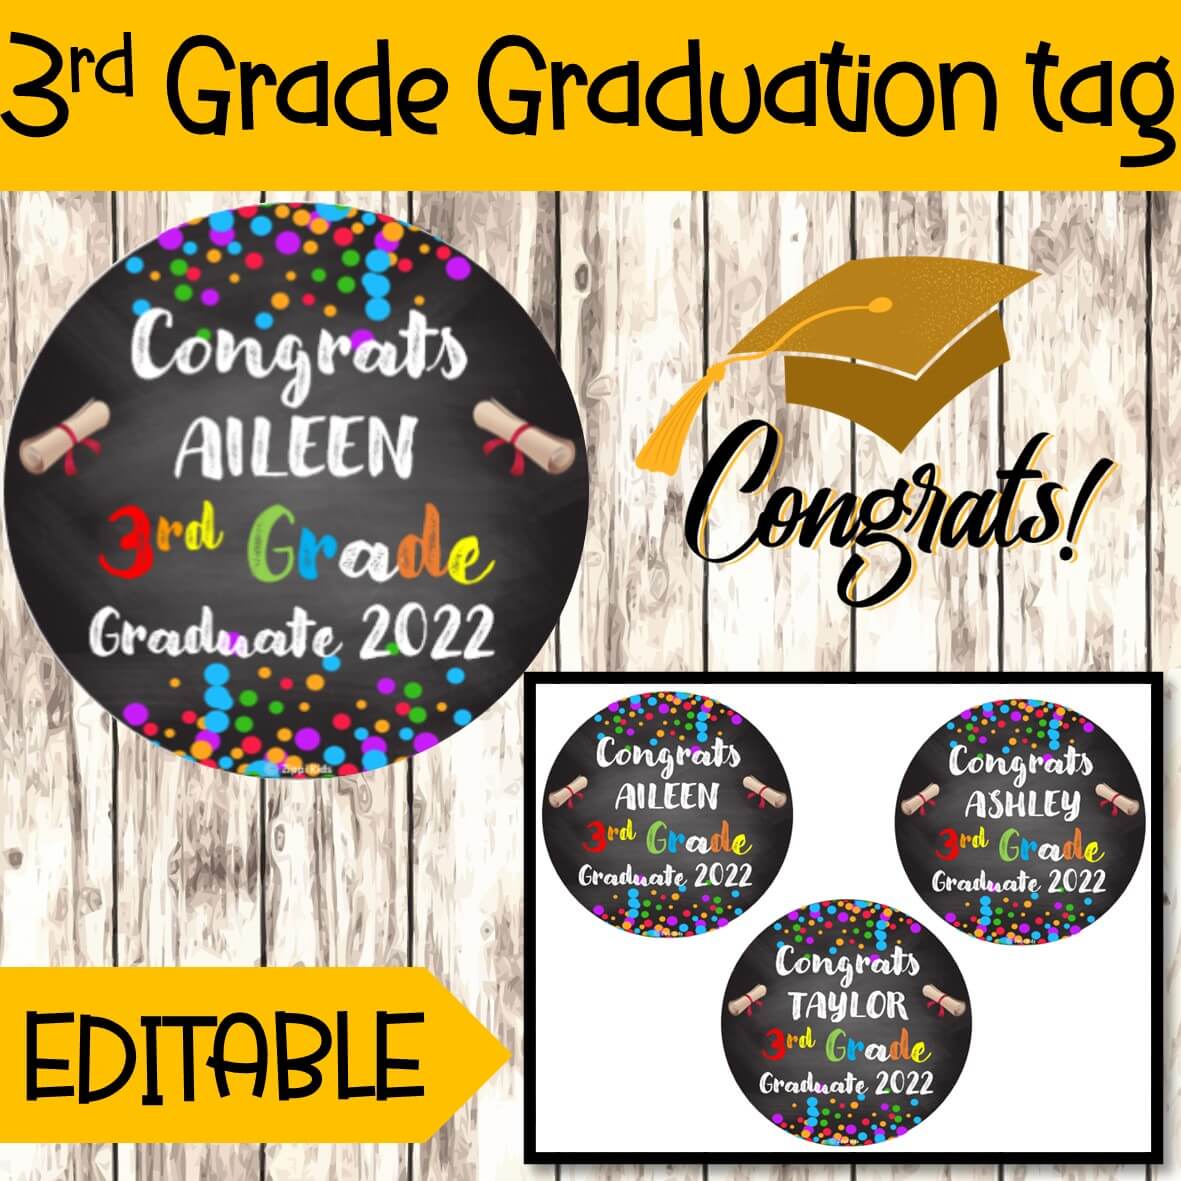 EDITABLE 3rd Grade Graduation Gift Tags, Congrats 3rd Grade Graduate tags